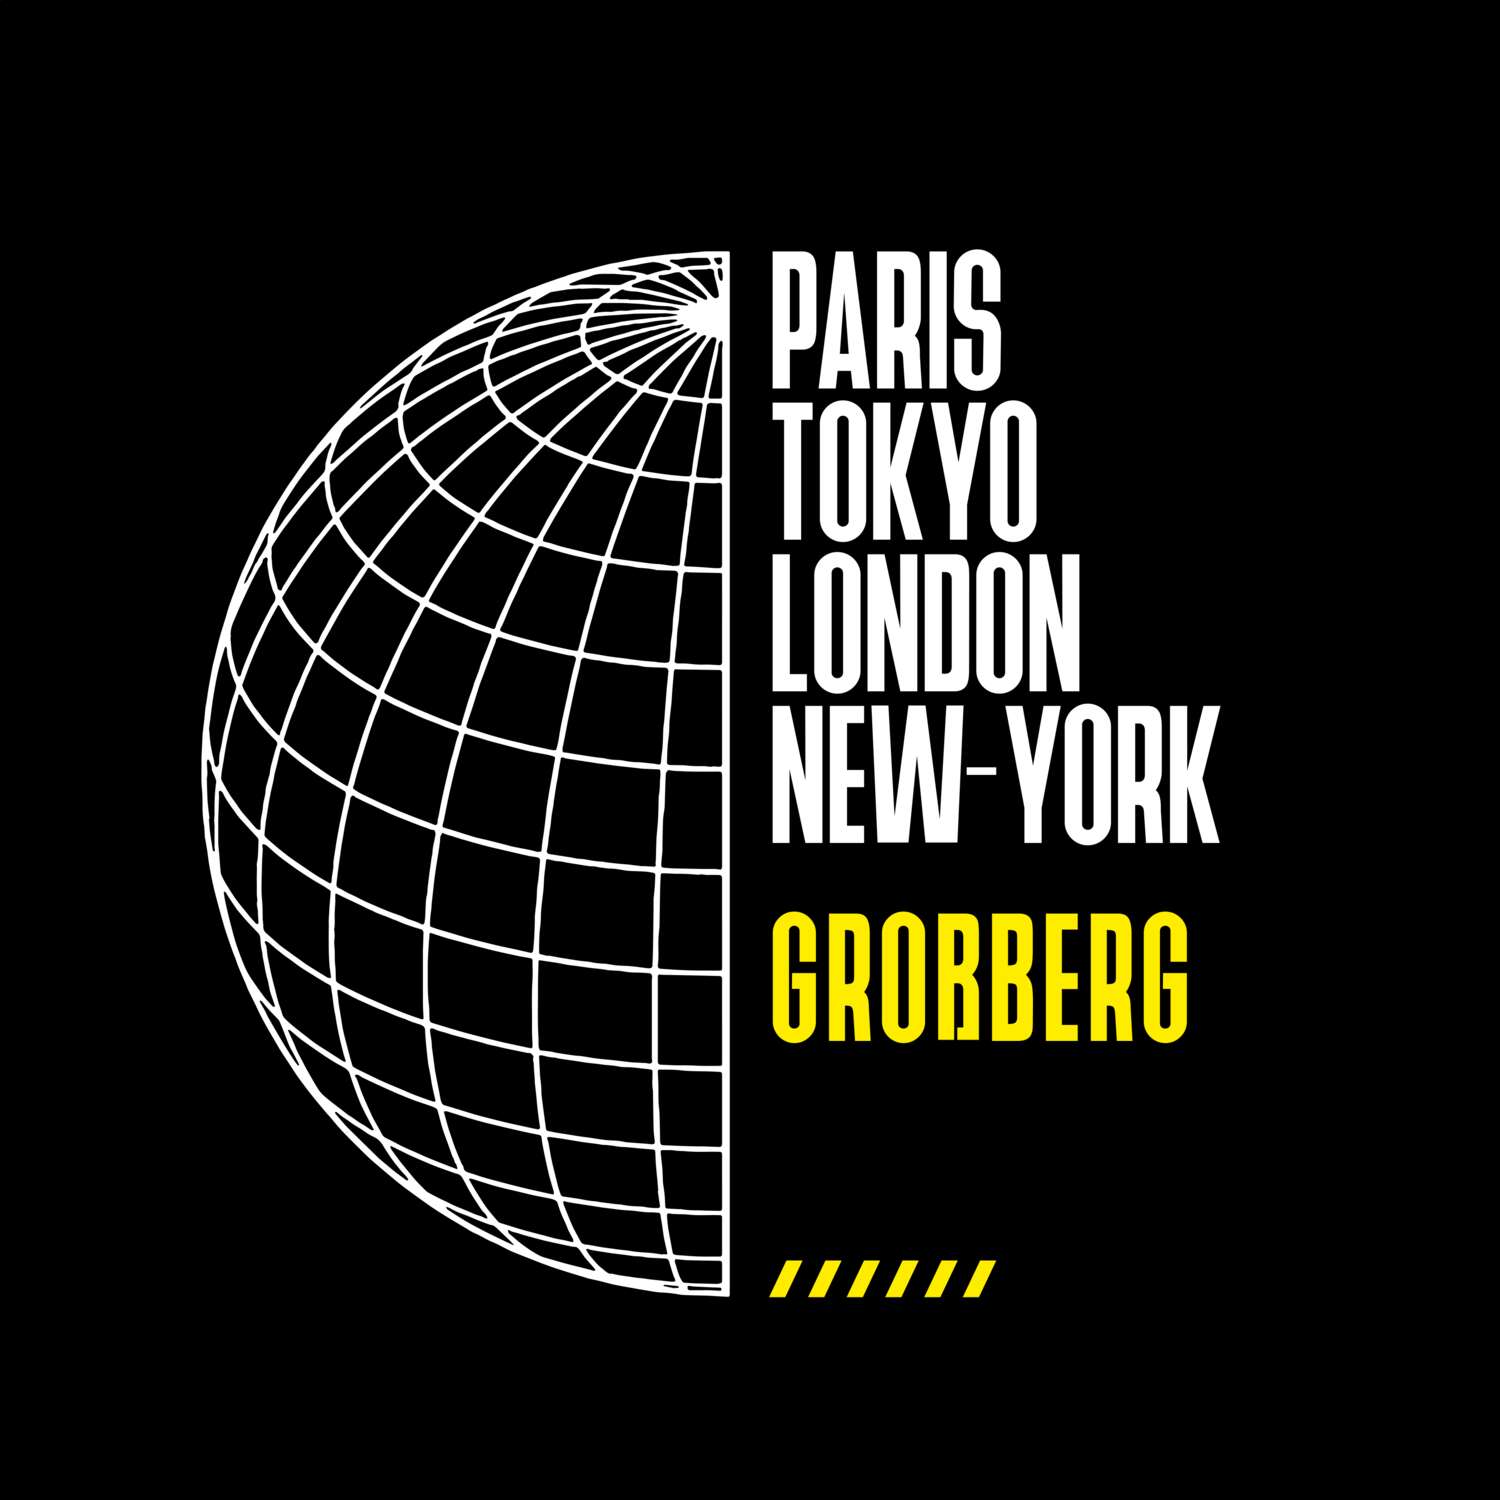 Großberg T-Shirt »Paris Tokyo London«